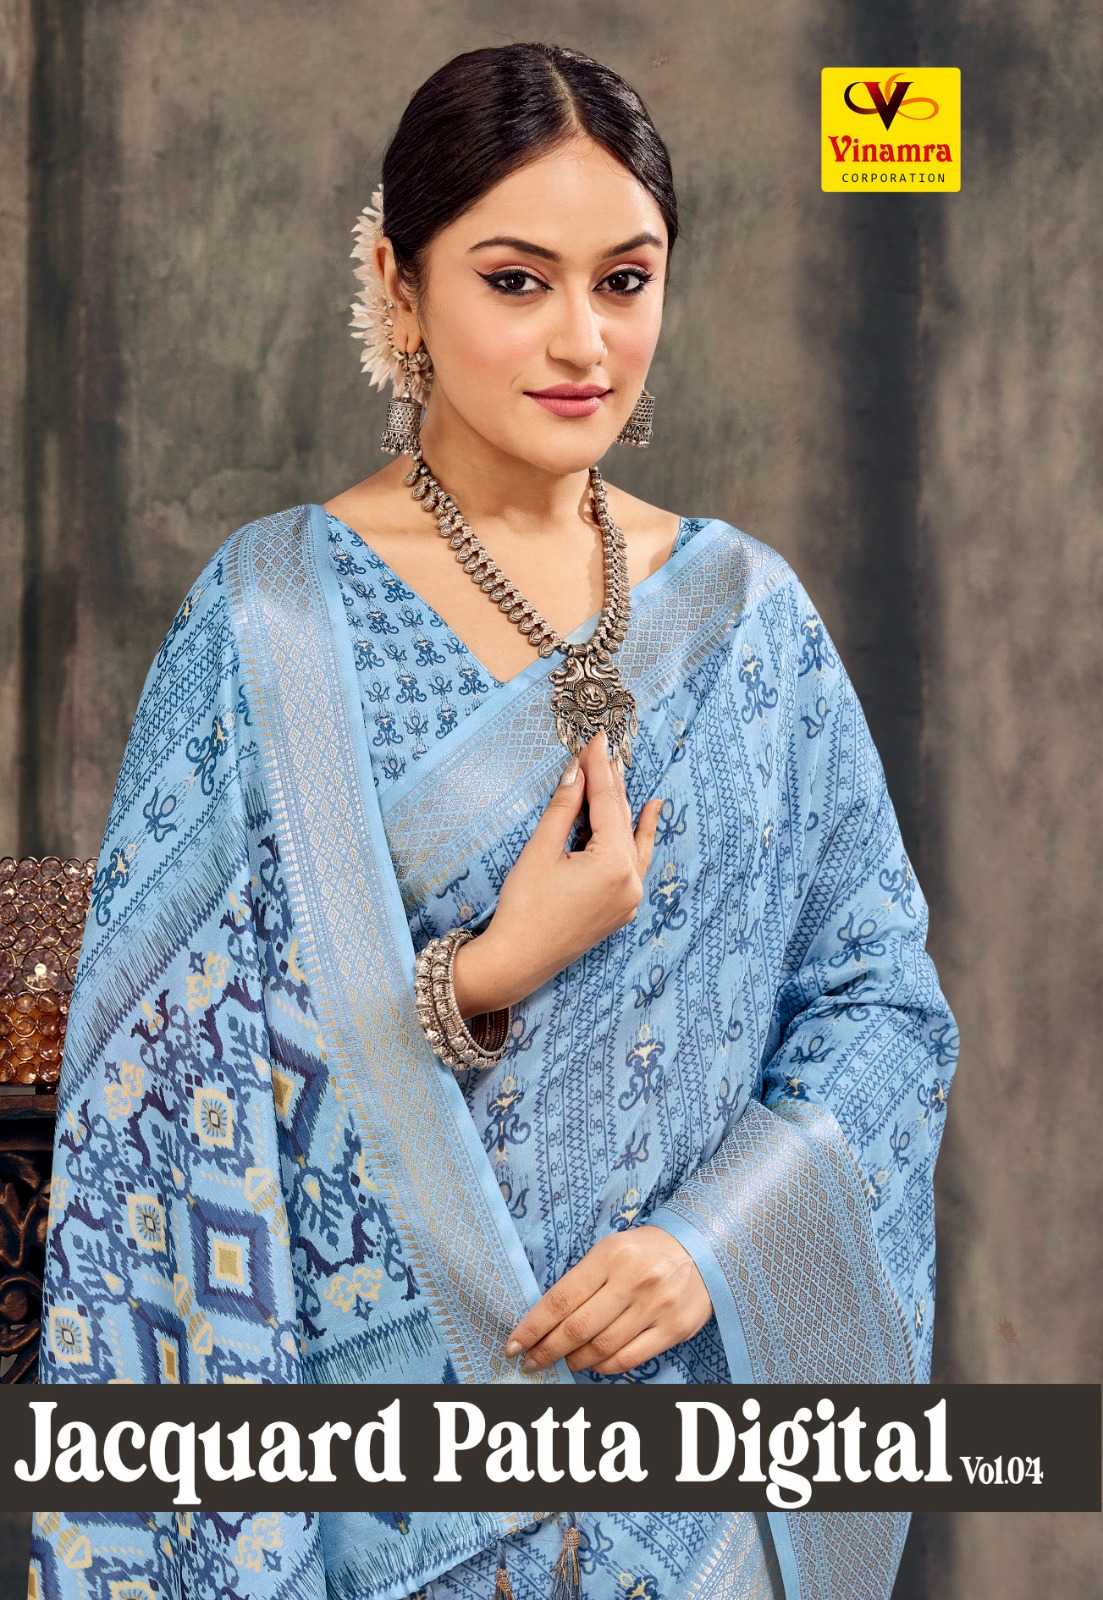 vinamra jacquard patta digital print vol 4 casual wear beautiful sarees